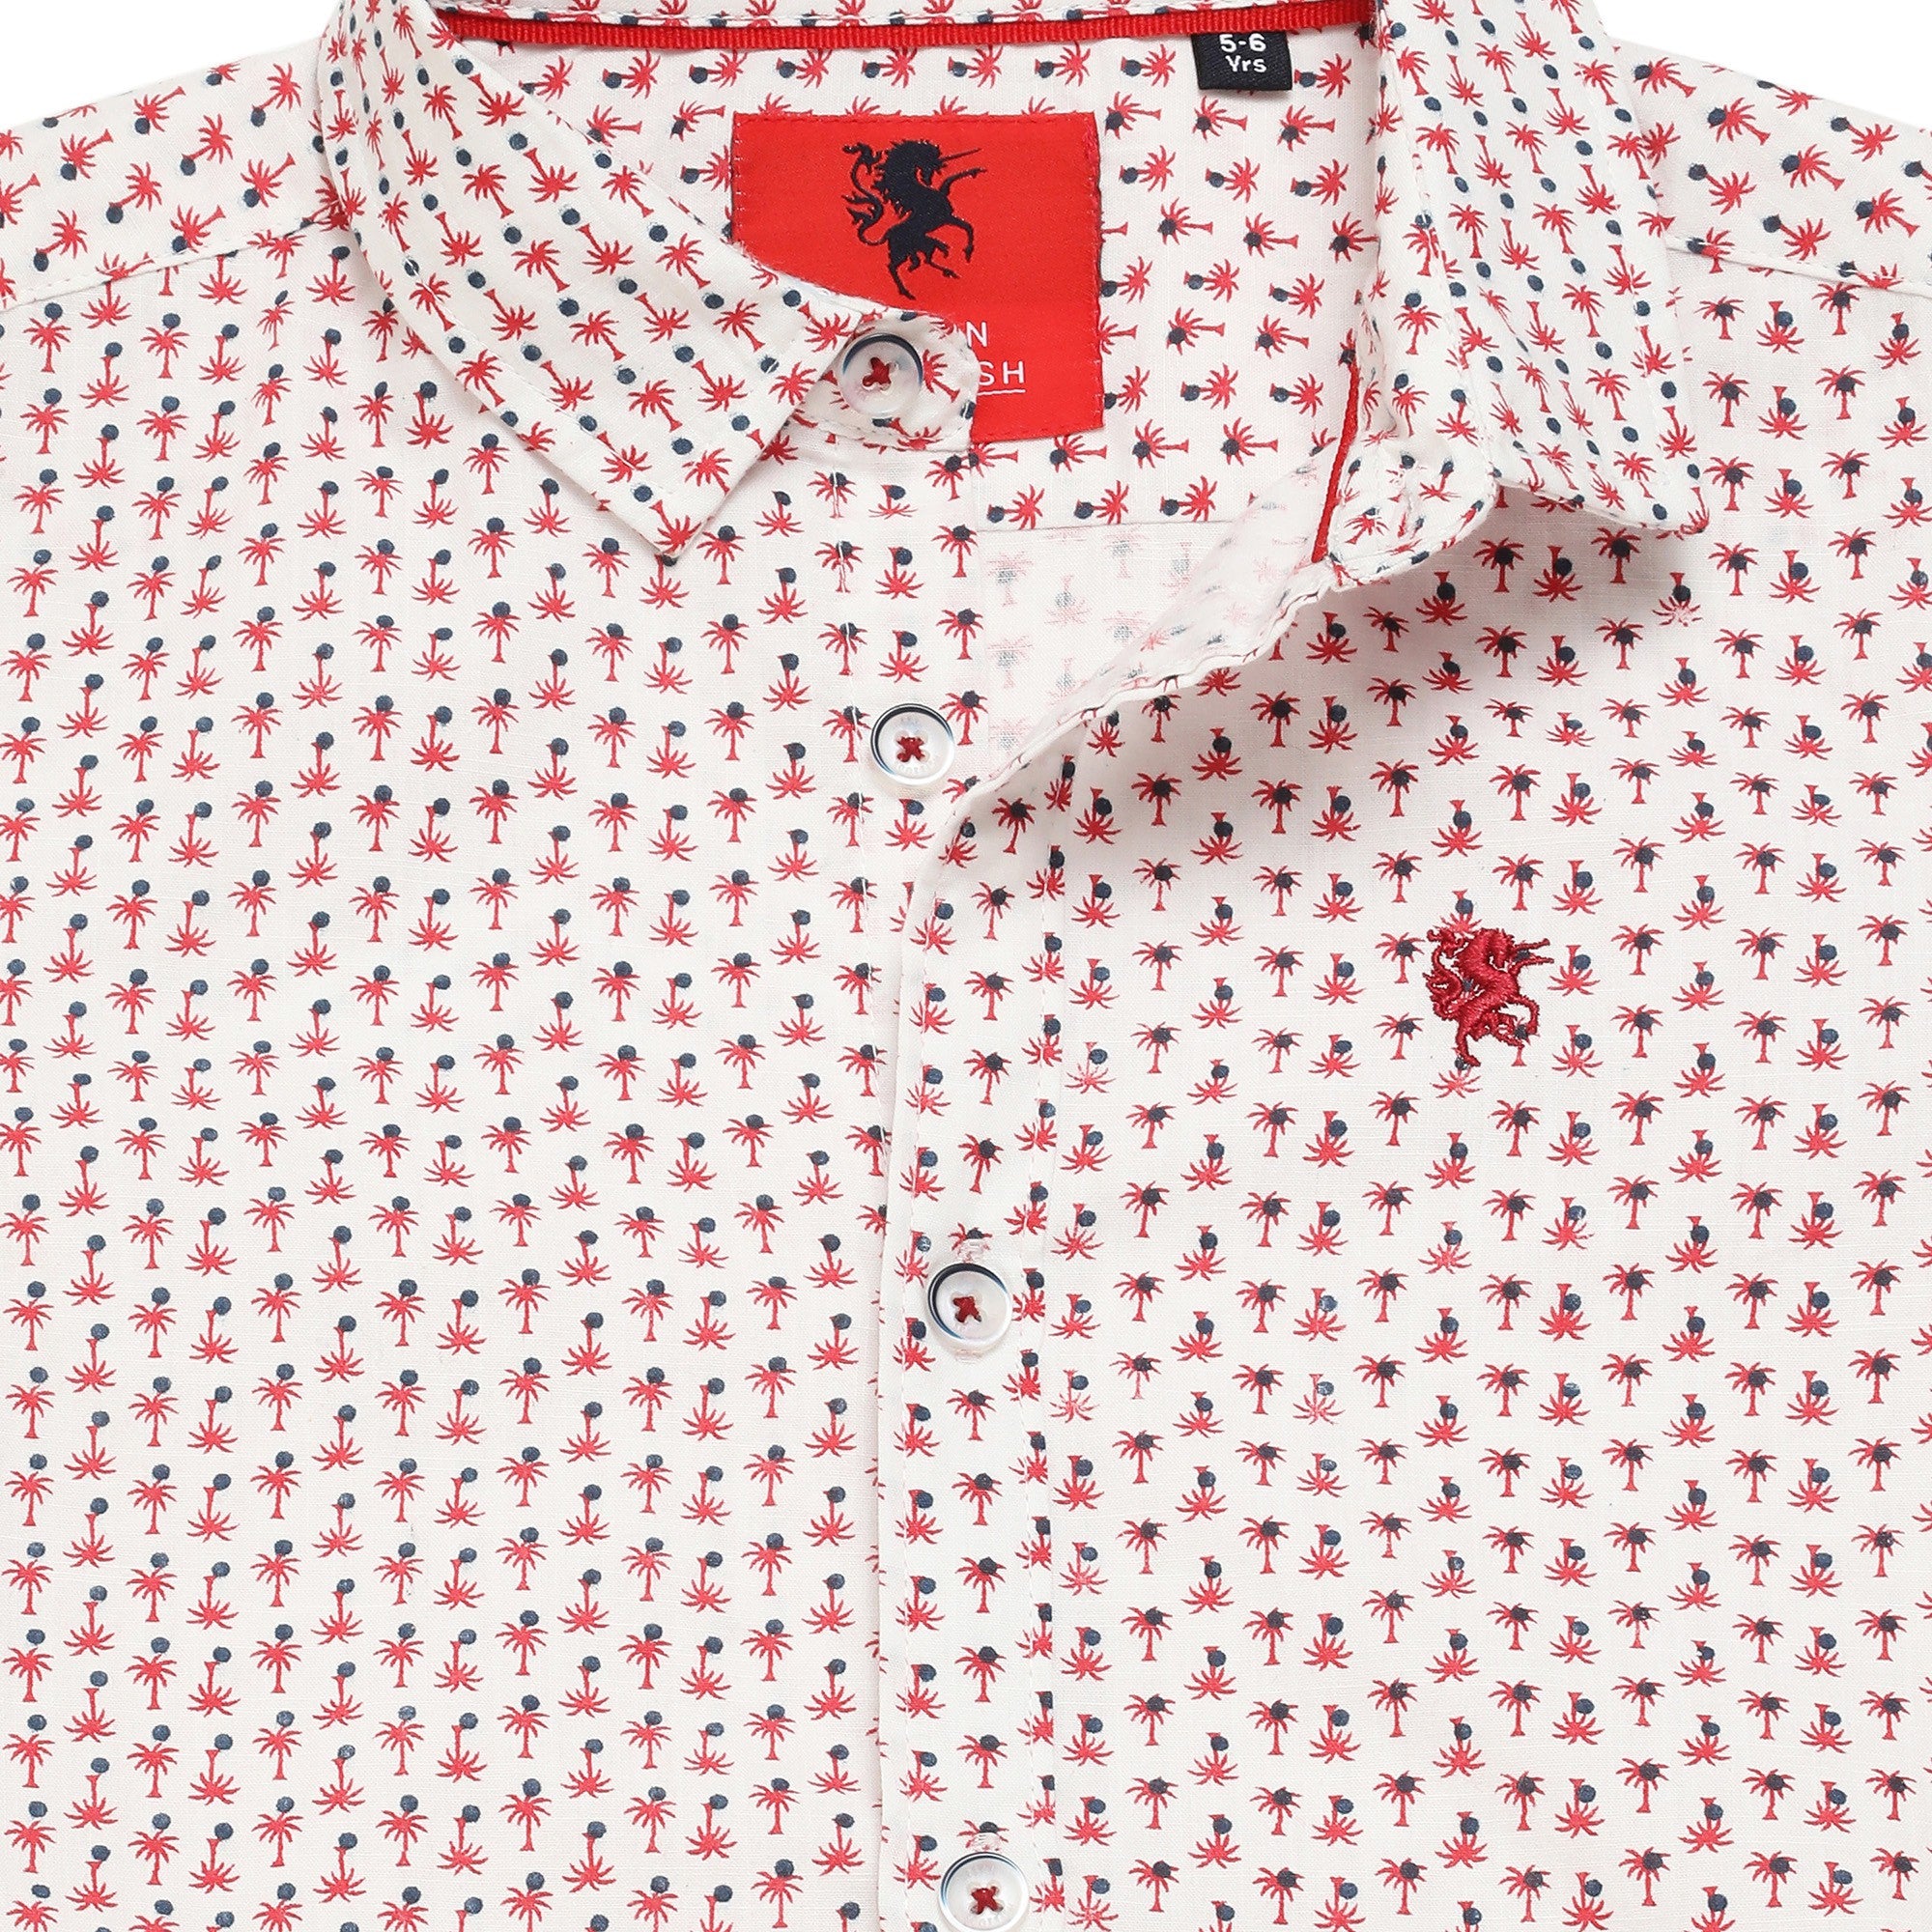 Urban Scottish Boys Printed Casual Red, White Shirt